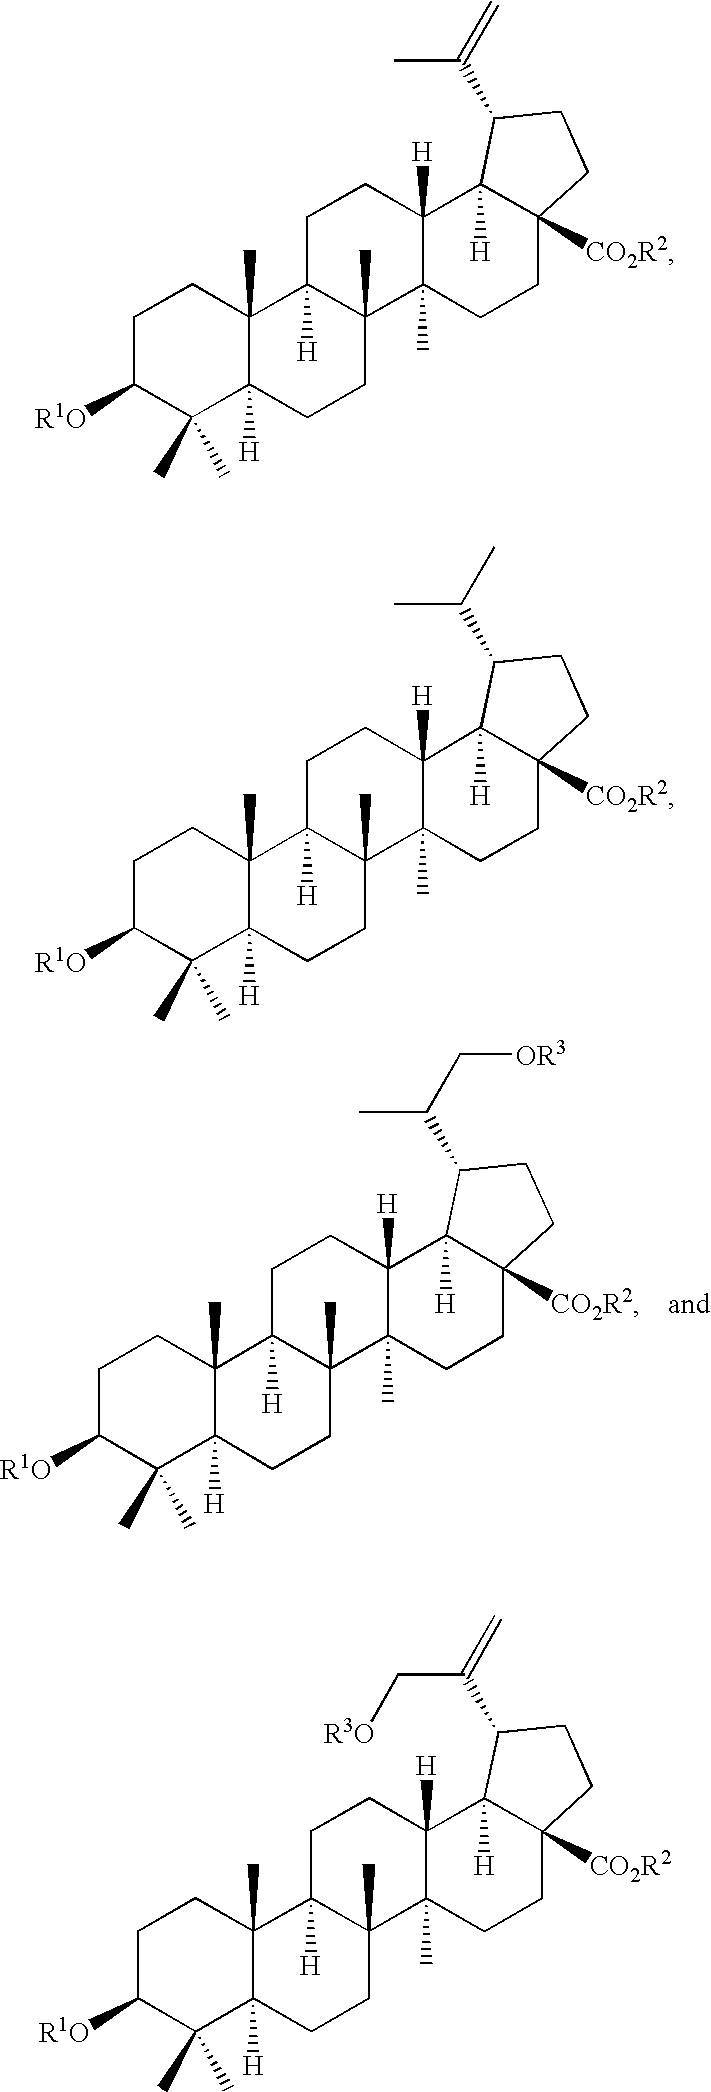 Method of preparing and use of prodrugs of betulinic acid derivatives